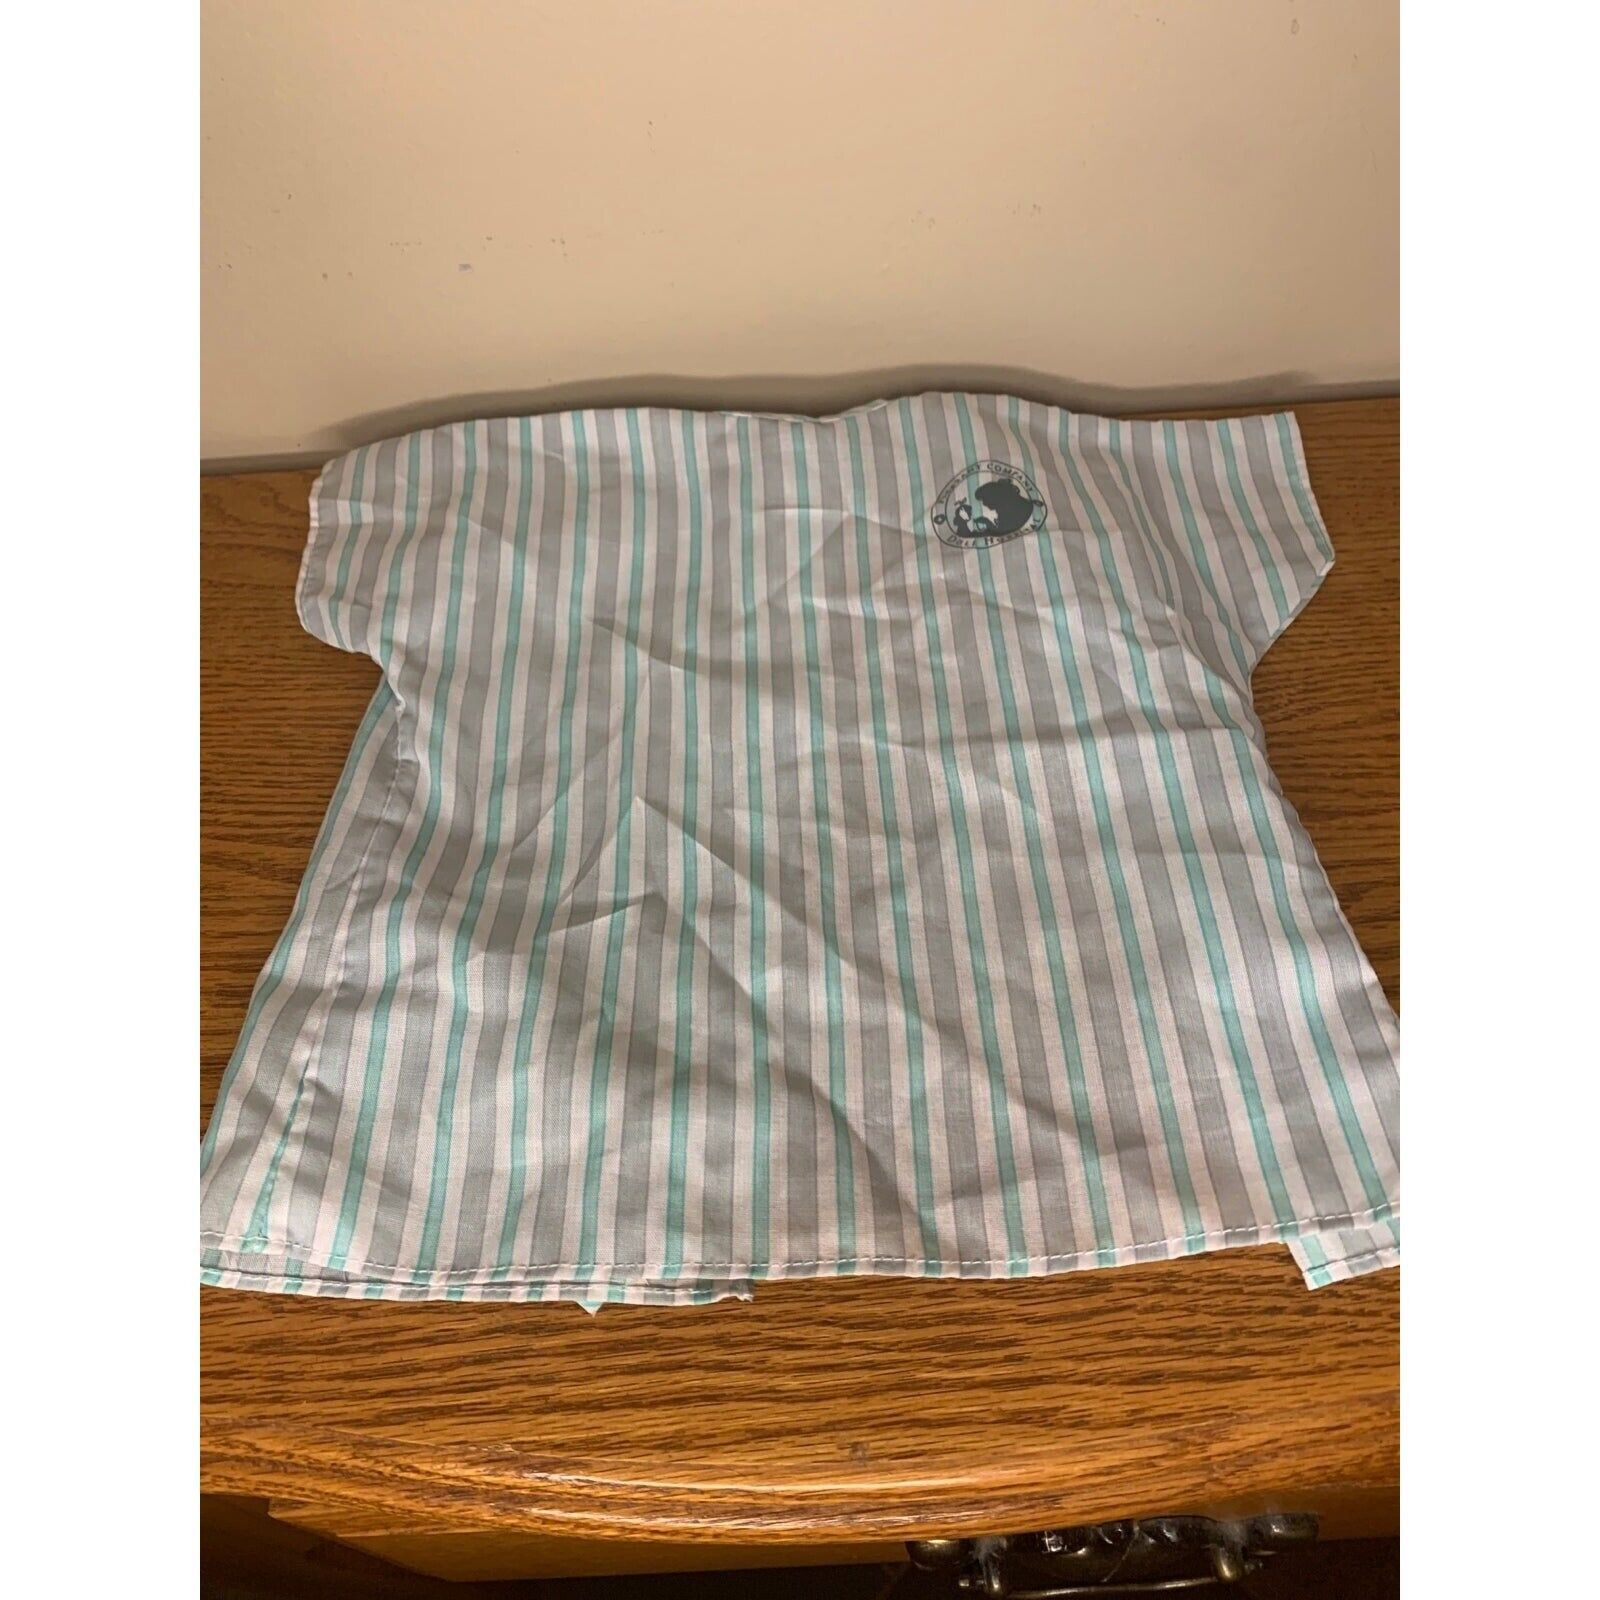 American Girl Doll Hospital Gown Green/ Gray EUC Pleasant Company - $7.60